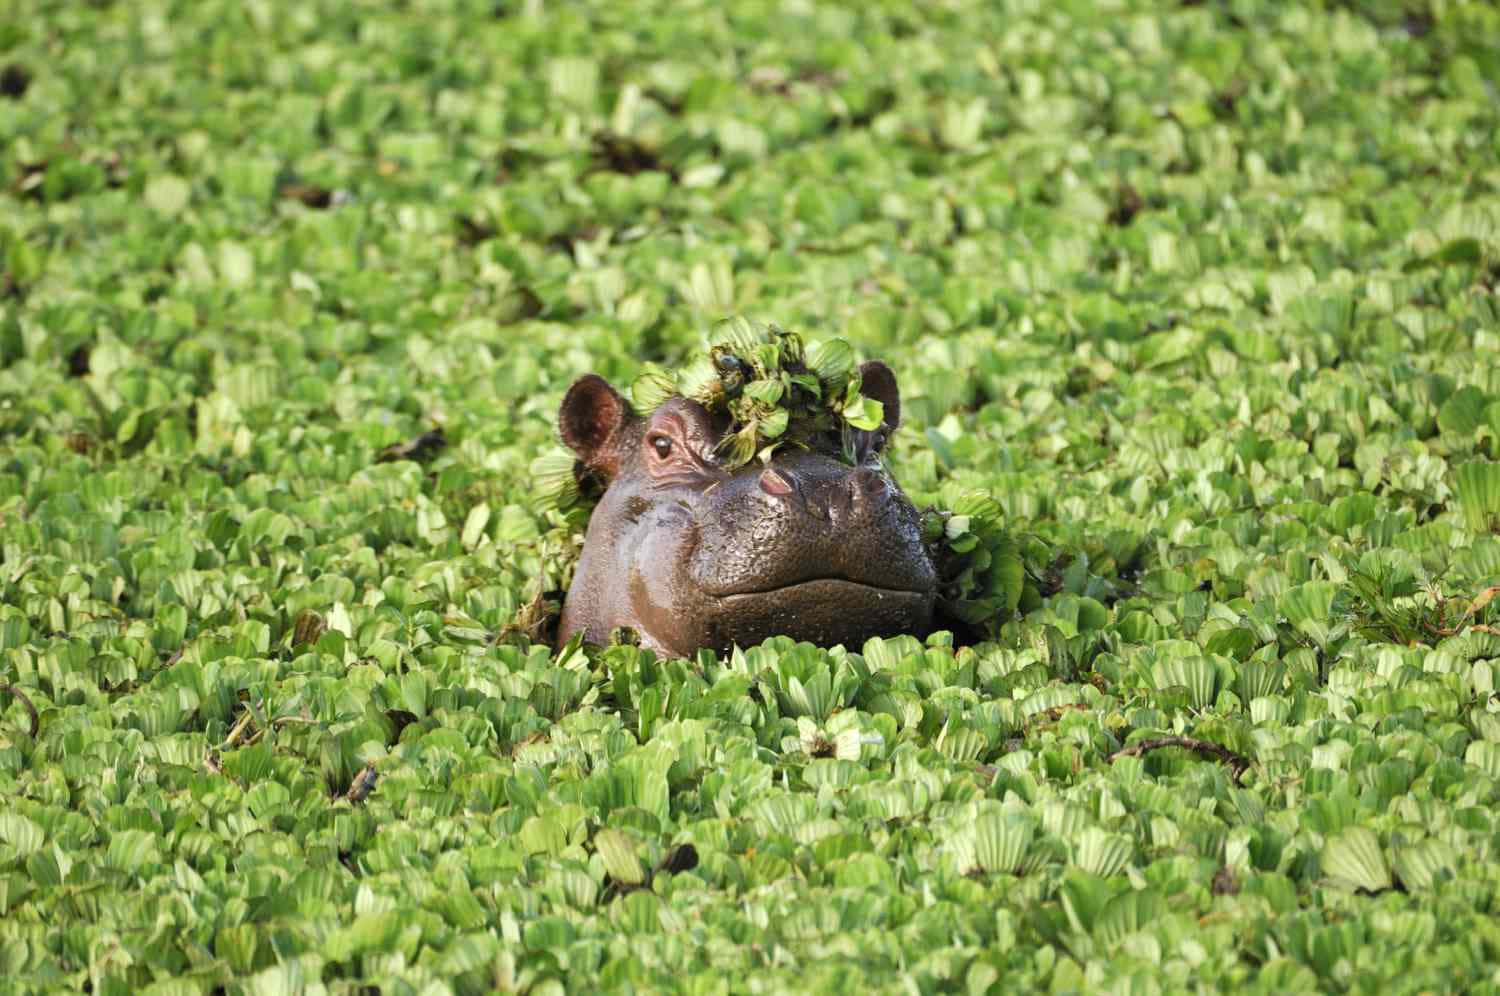 A close-up of a large hippopotamus grazing